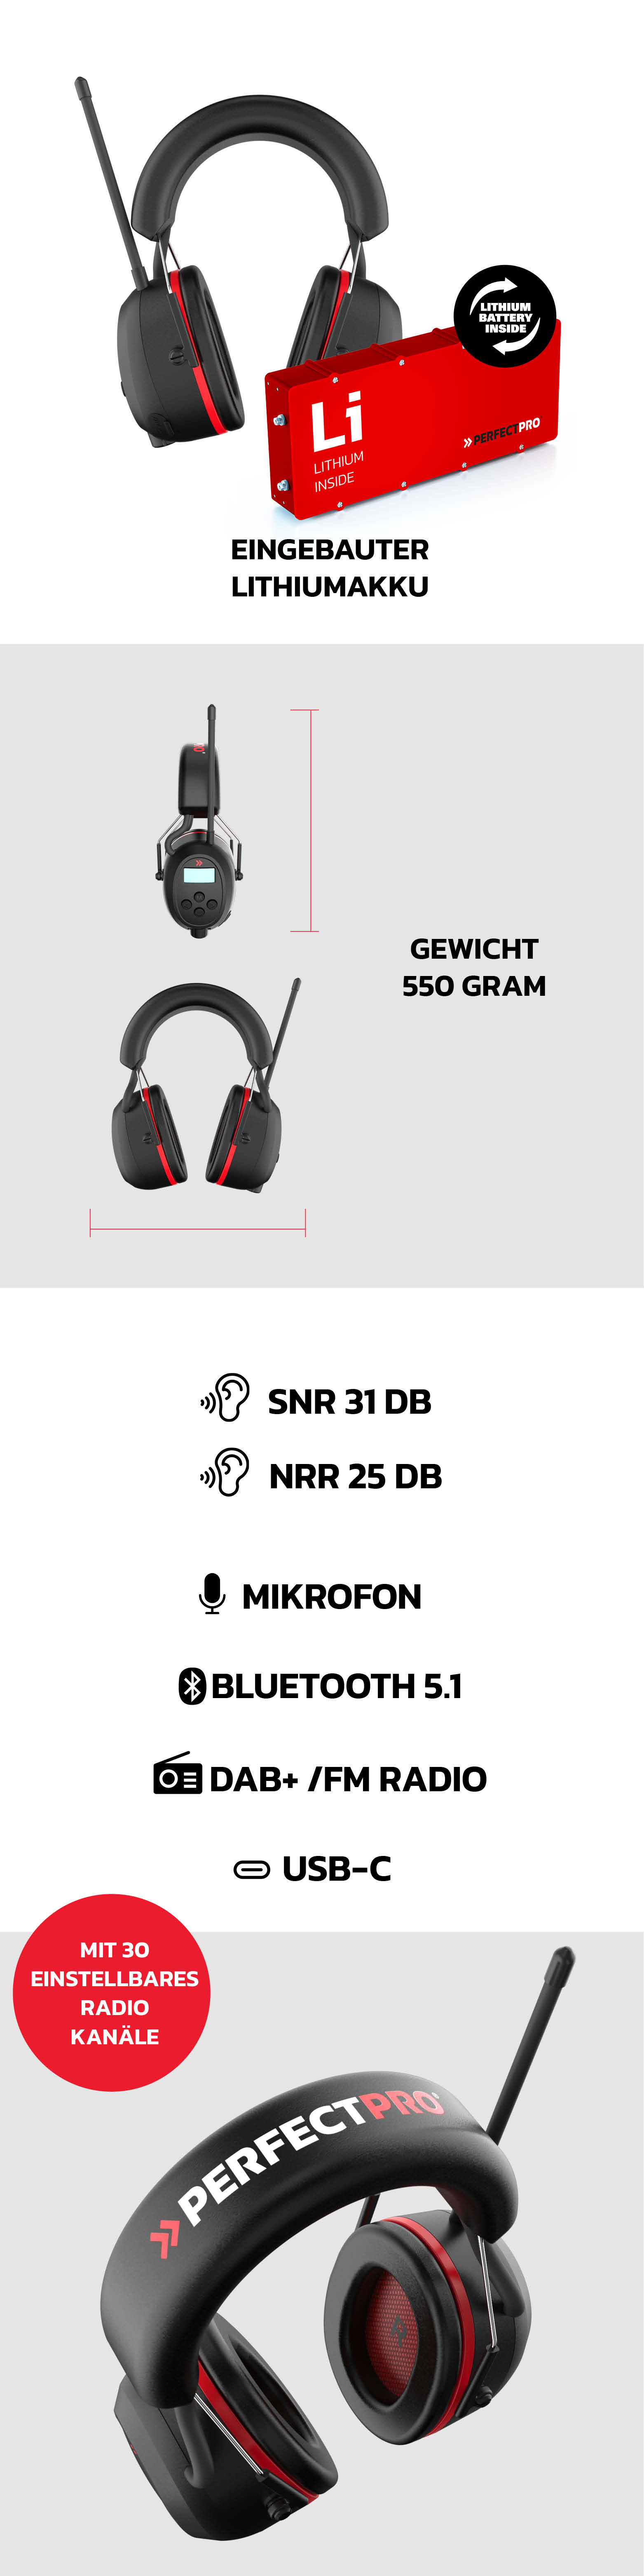 PerfectPro EarProtection